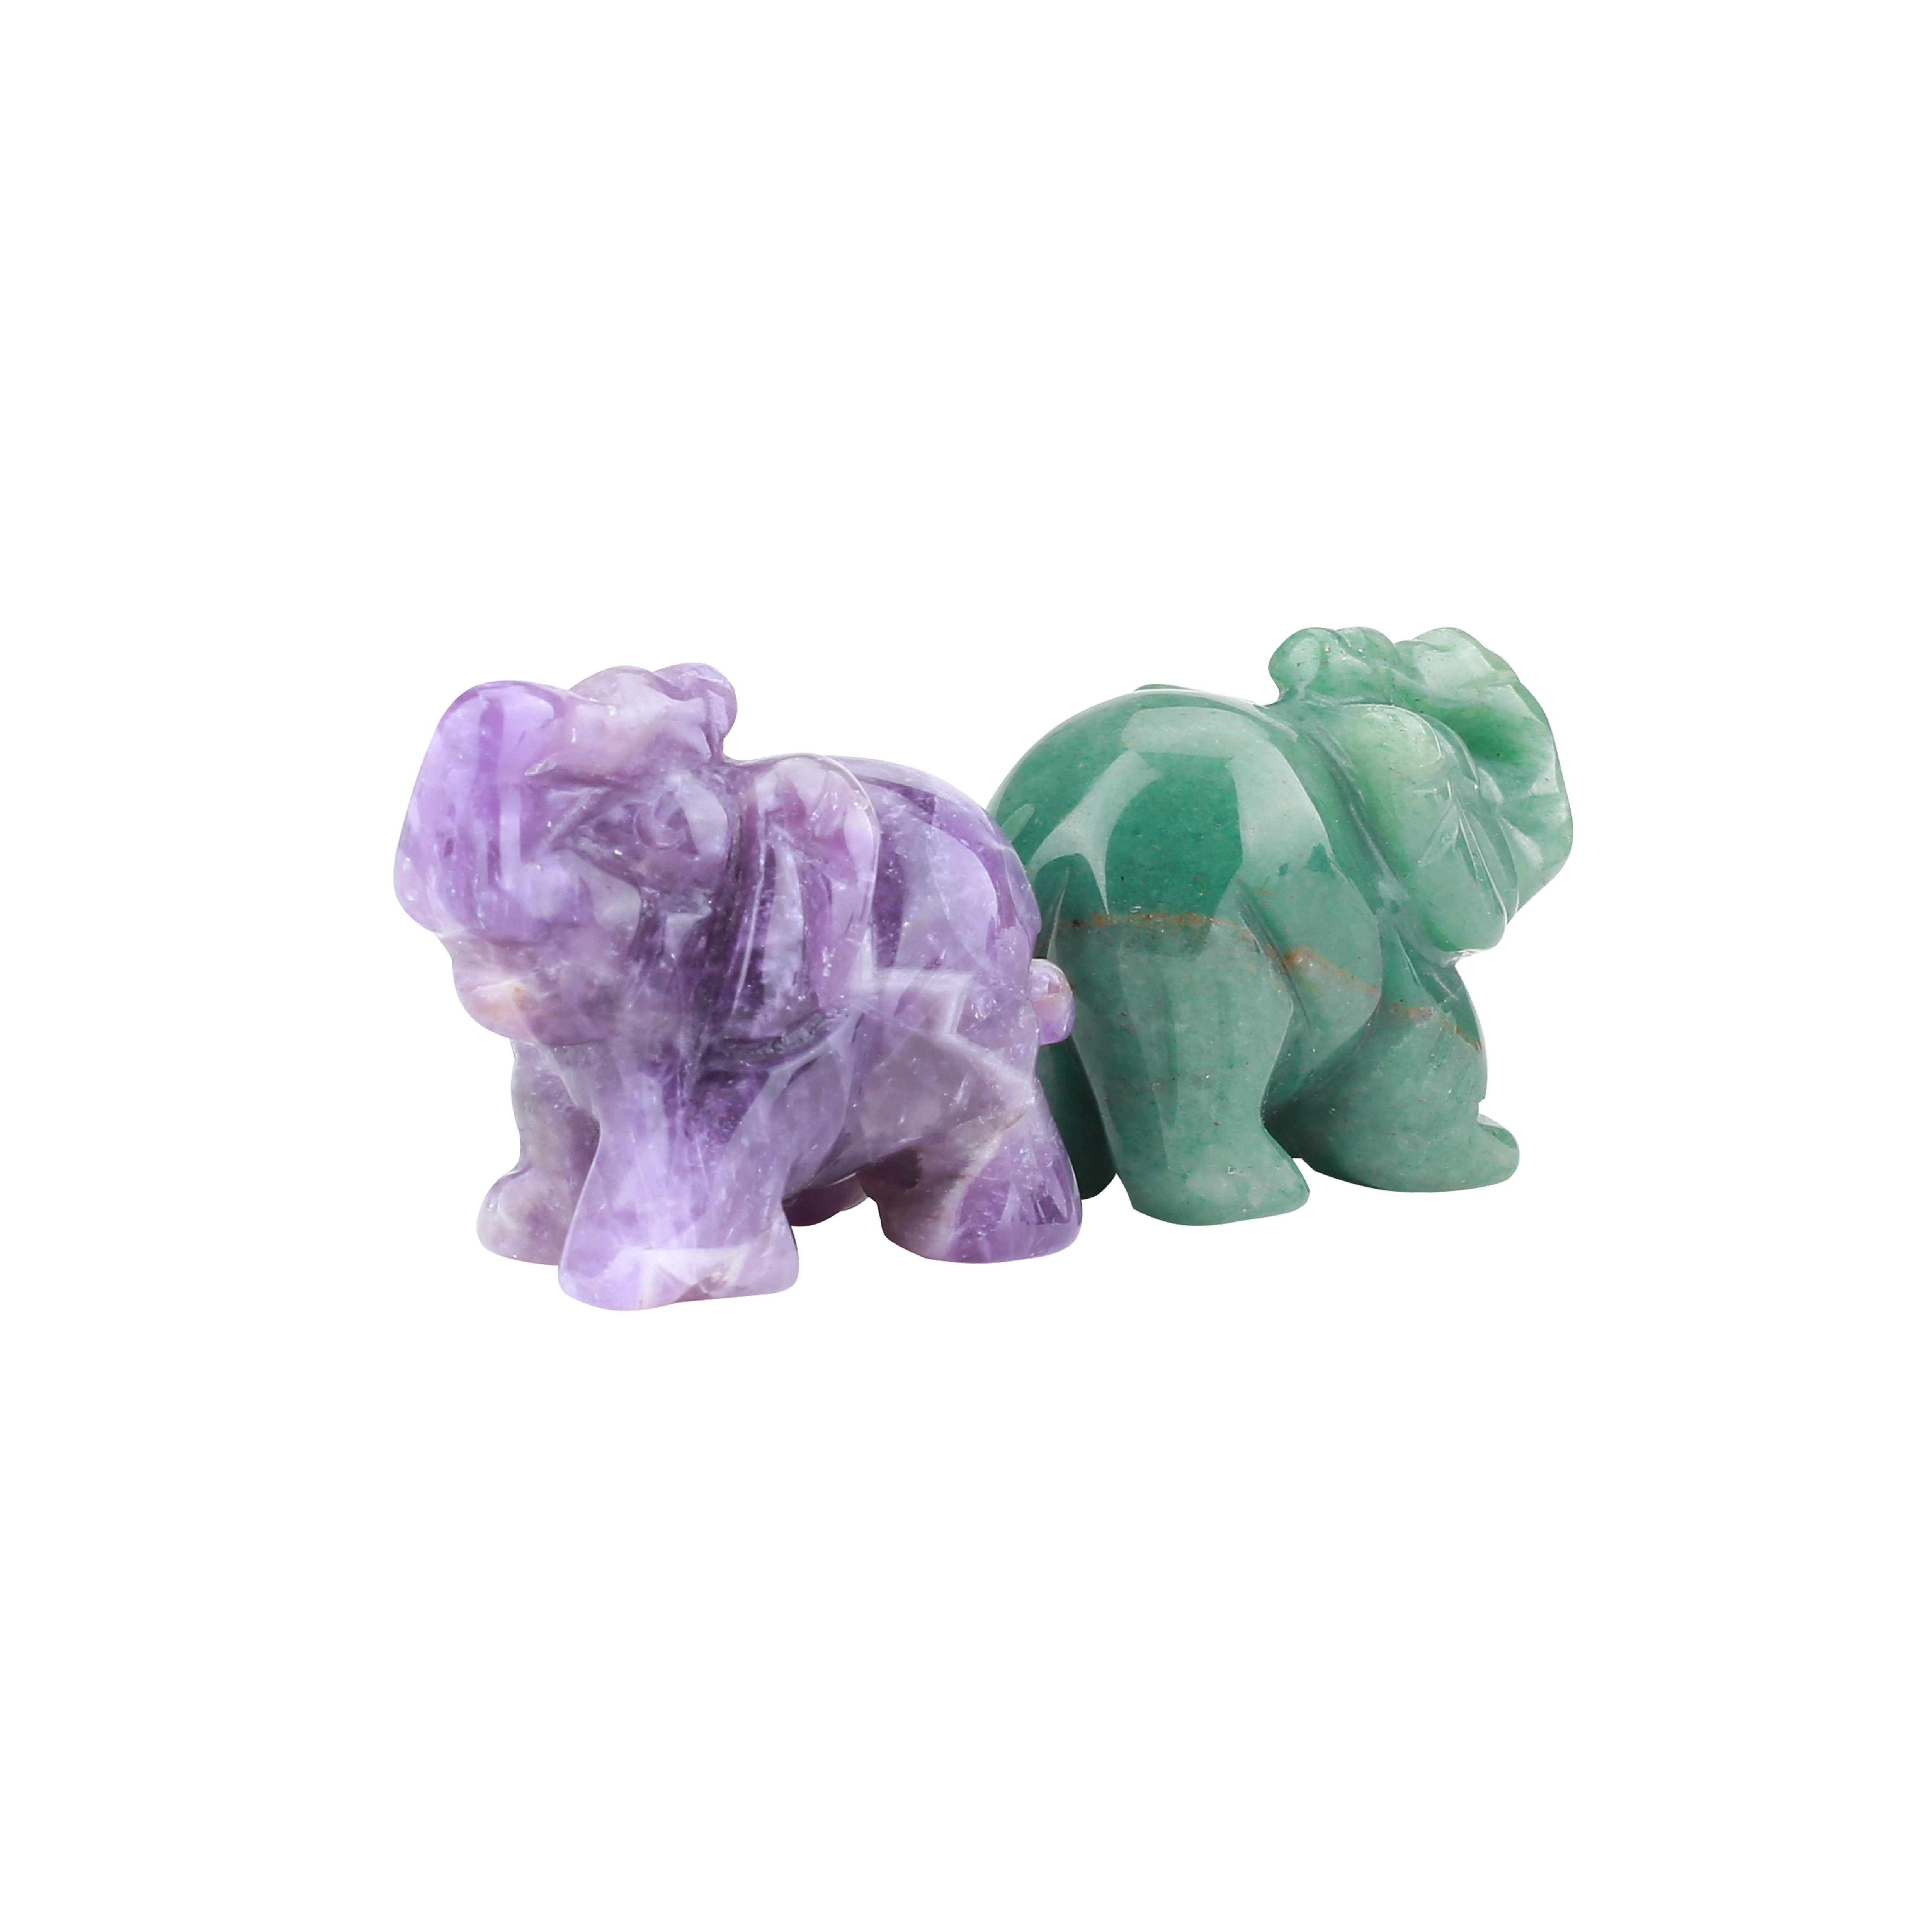 Jade Carving Sculpture Decorations Home Crystal Gem Crafts Jade Elephant Amethyst